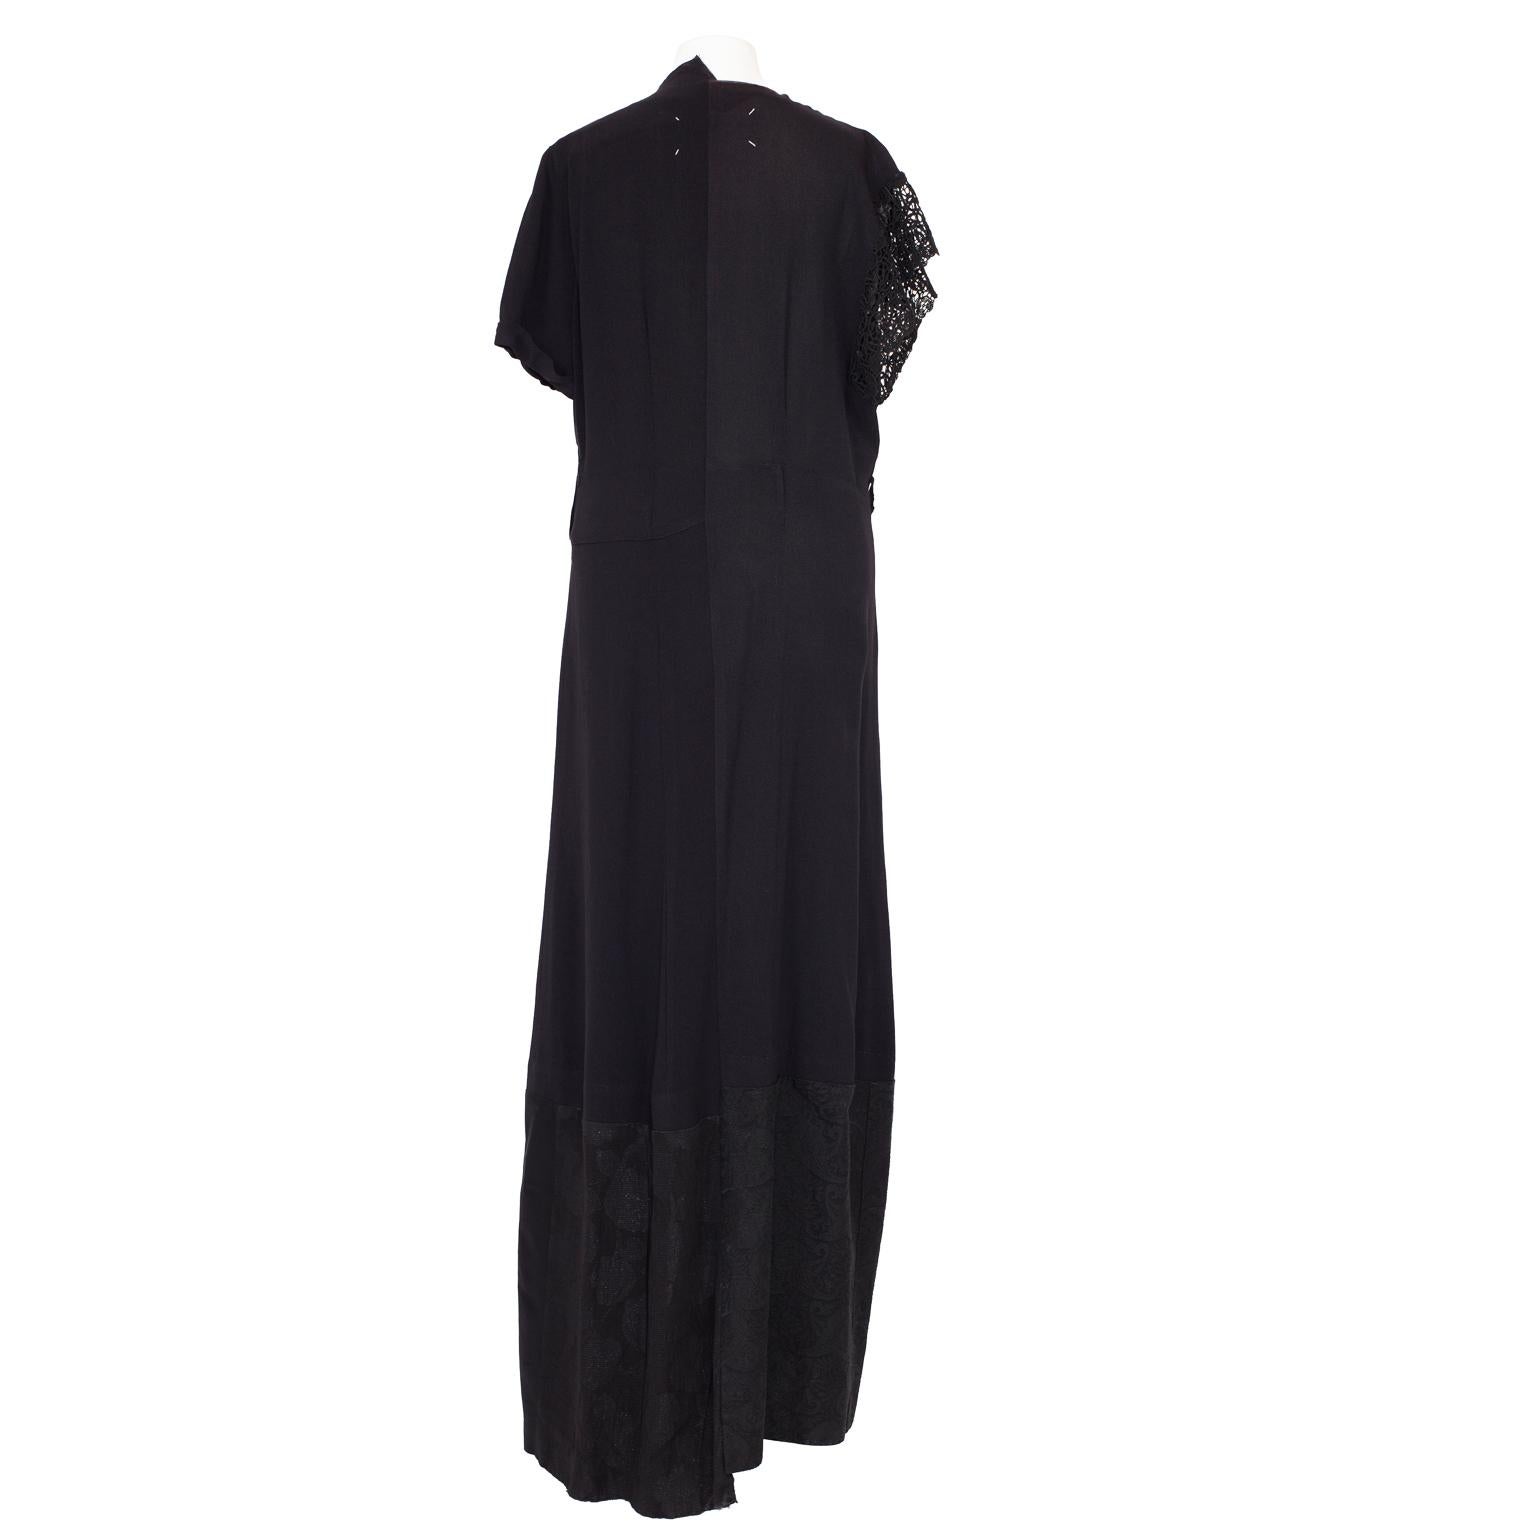 Martin Margiela Artisanal Deconstructed Black Dress, 1993 / SS 1994 1